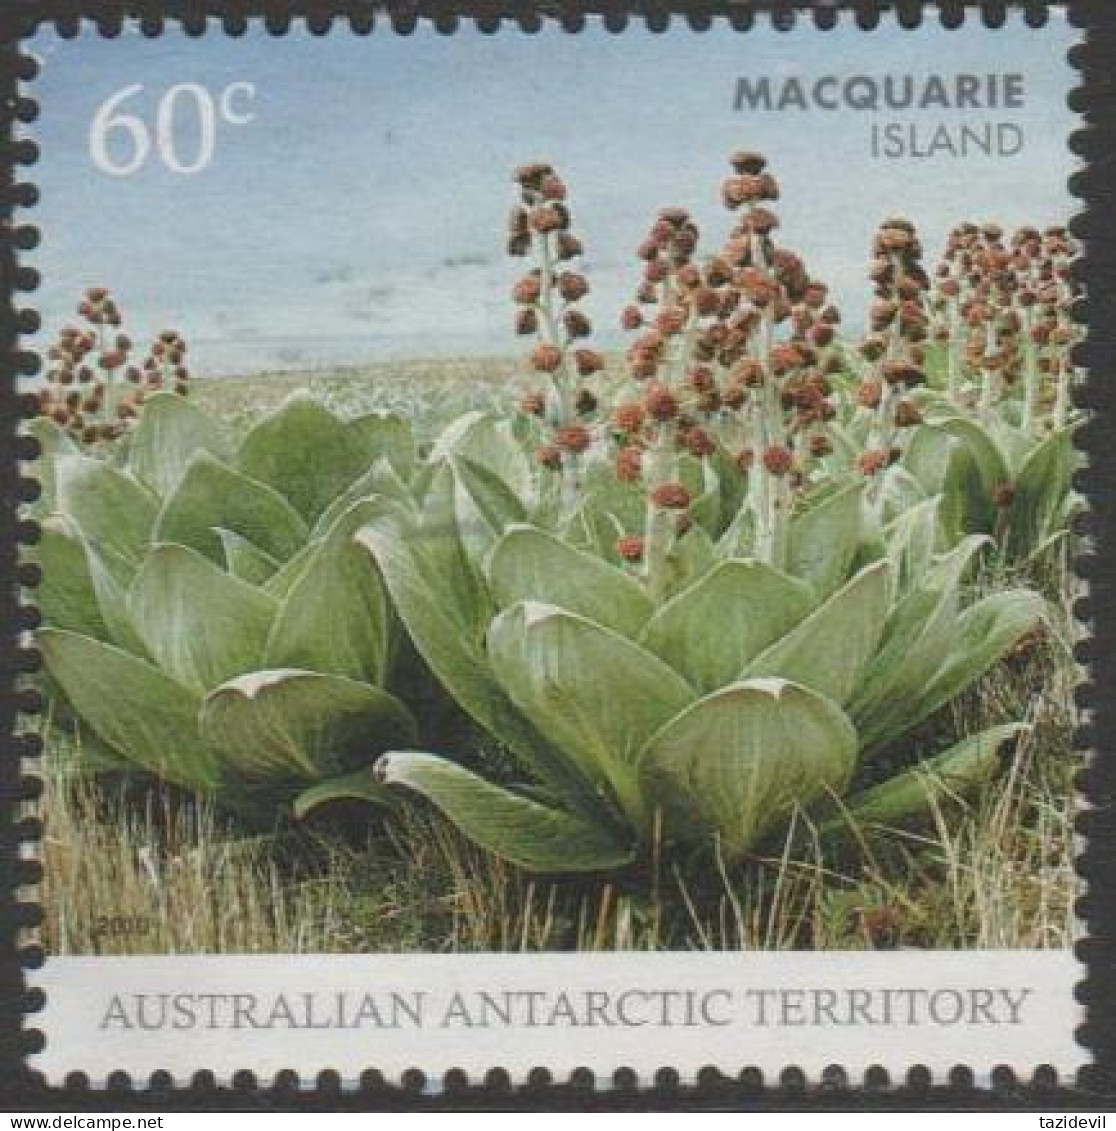 AUSTRALIALIAN ANTARCTIC TERRITORY - USED 2010 60c Macquarie Island - Flowers - Usados